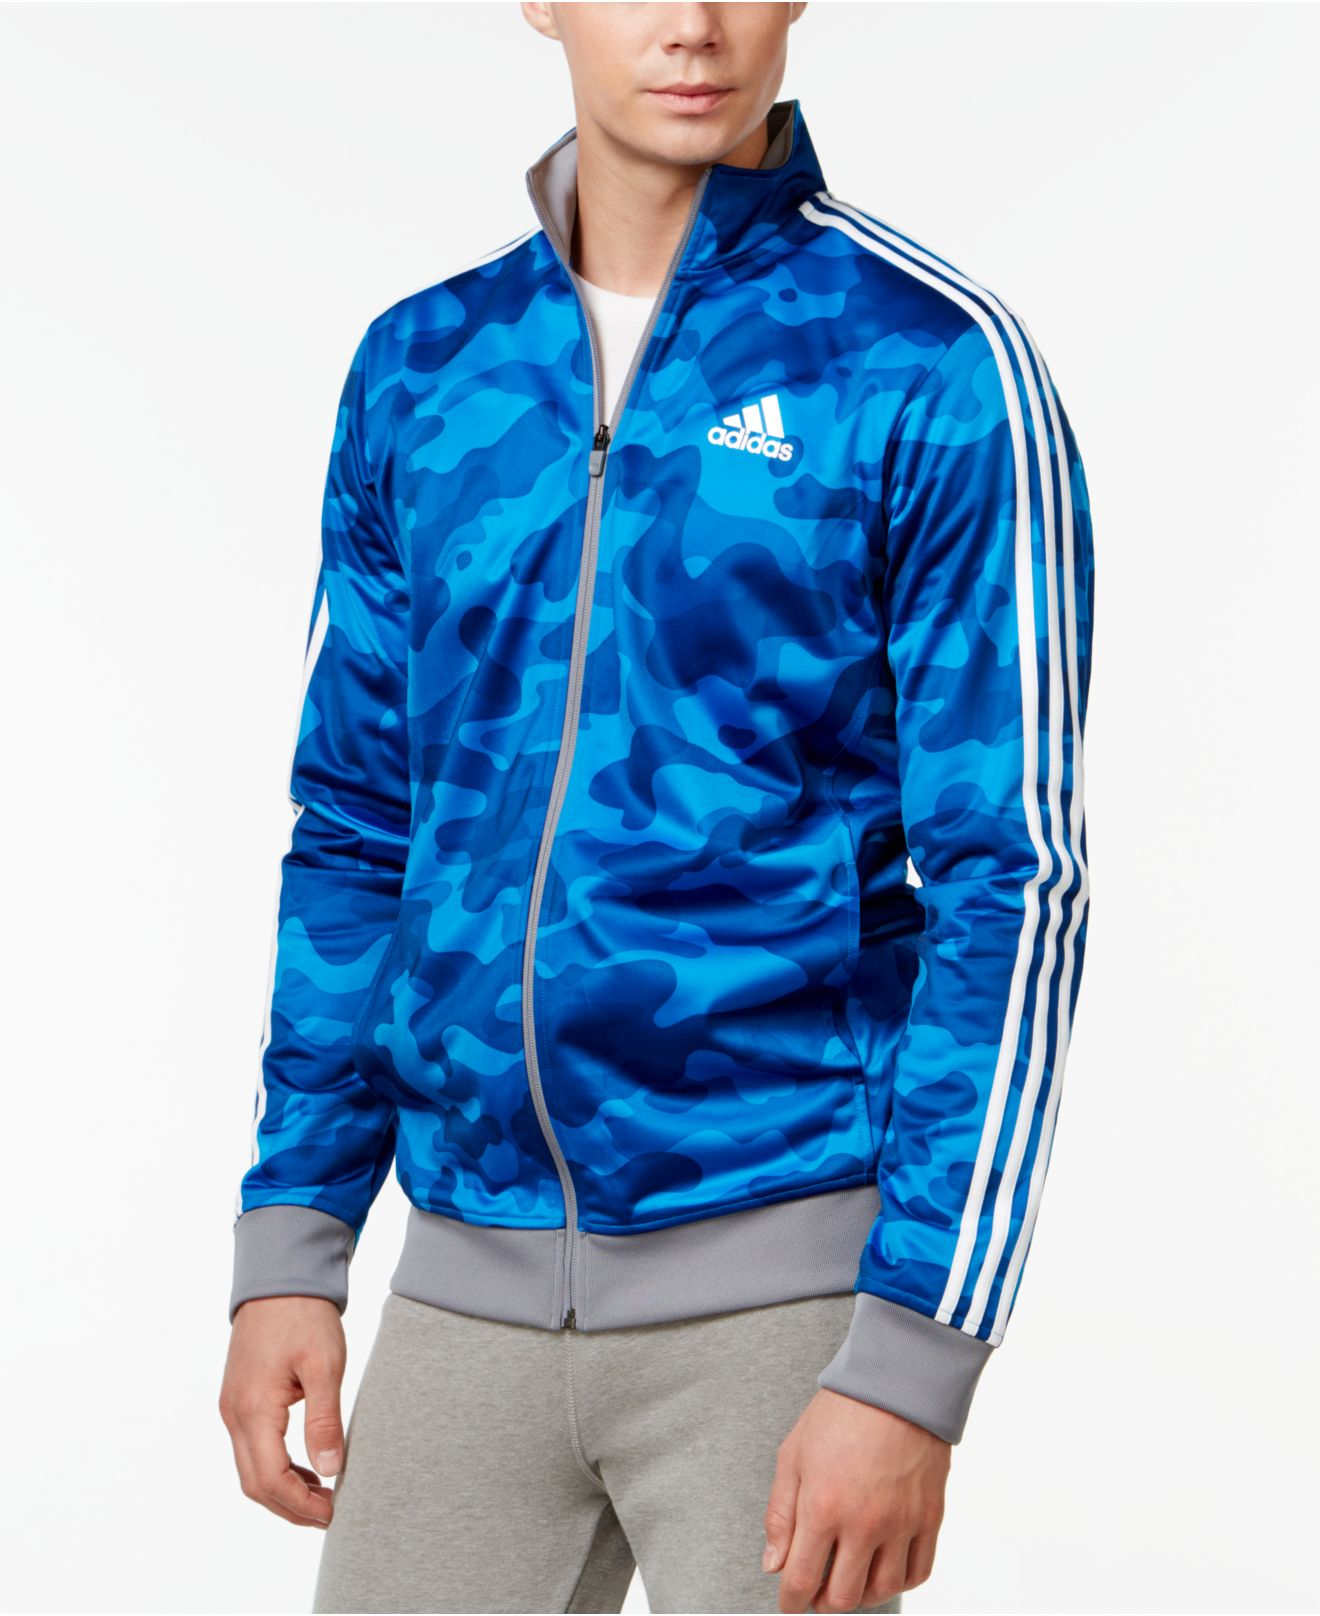 adidas blue camo jacket